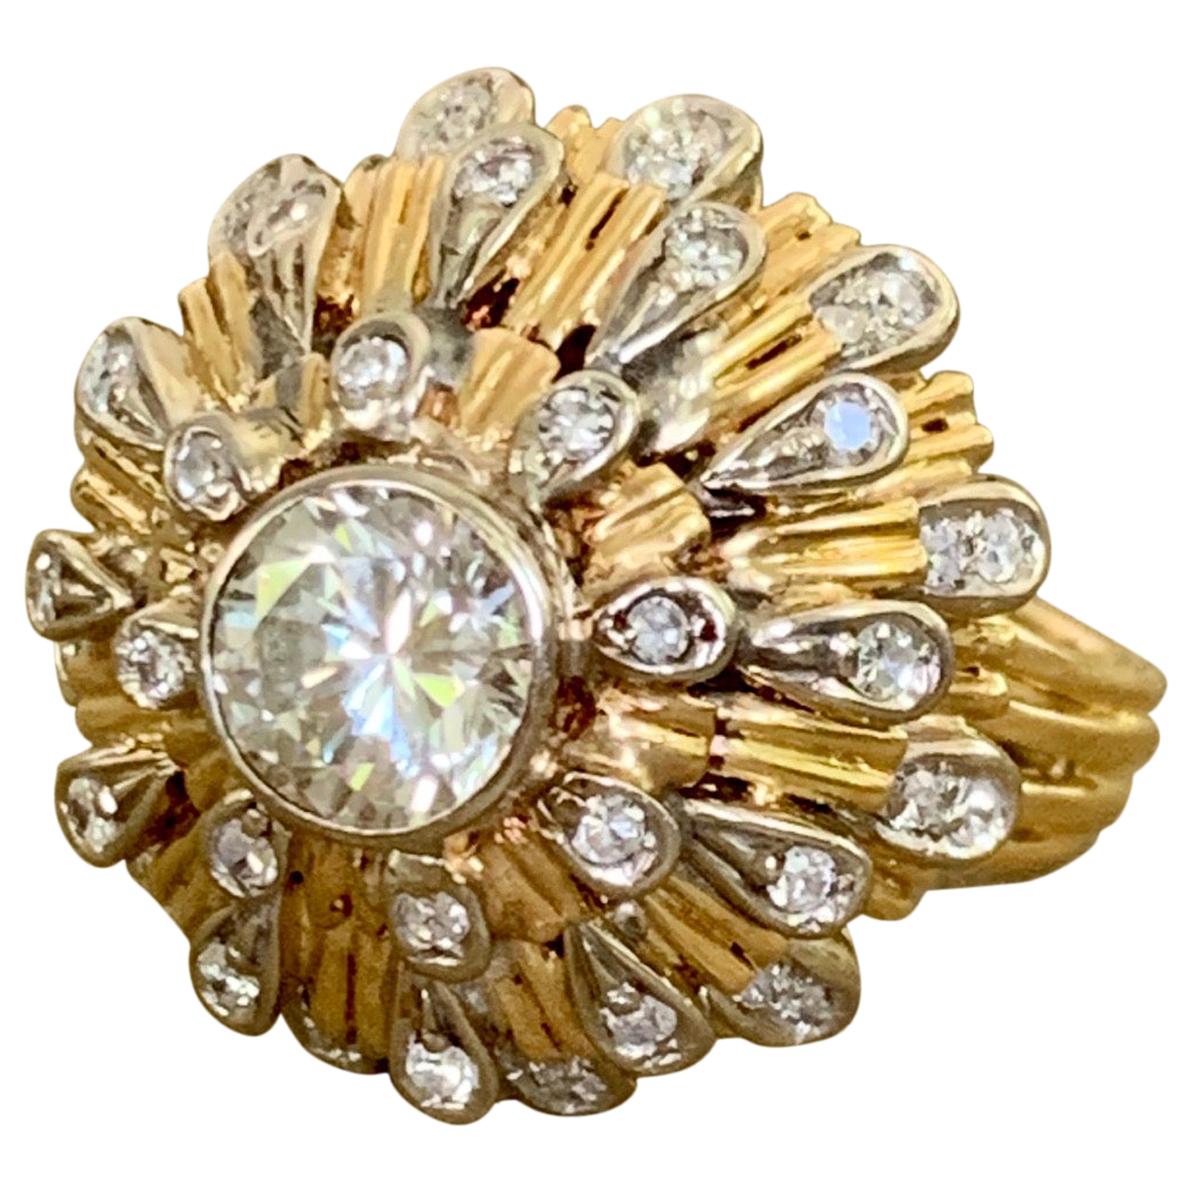 Modern 1.7 Carat Brilliant Cut Diamond 18 Karat Yellow Gold Dome Ring - Size 6